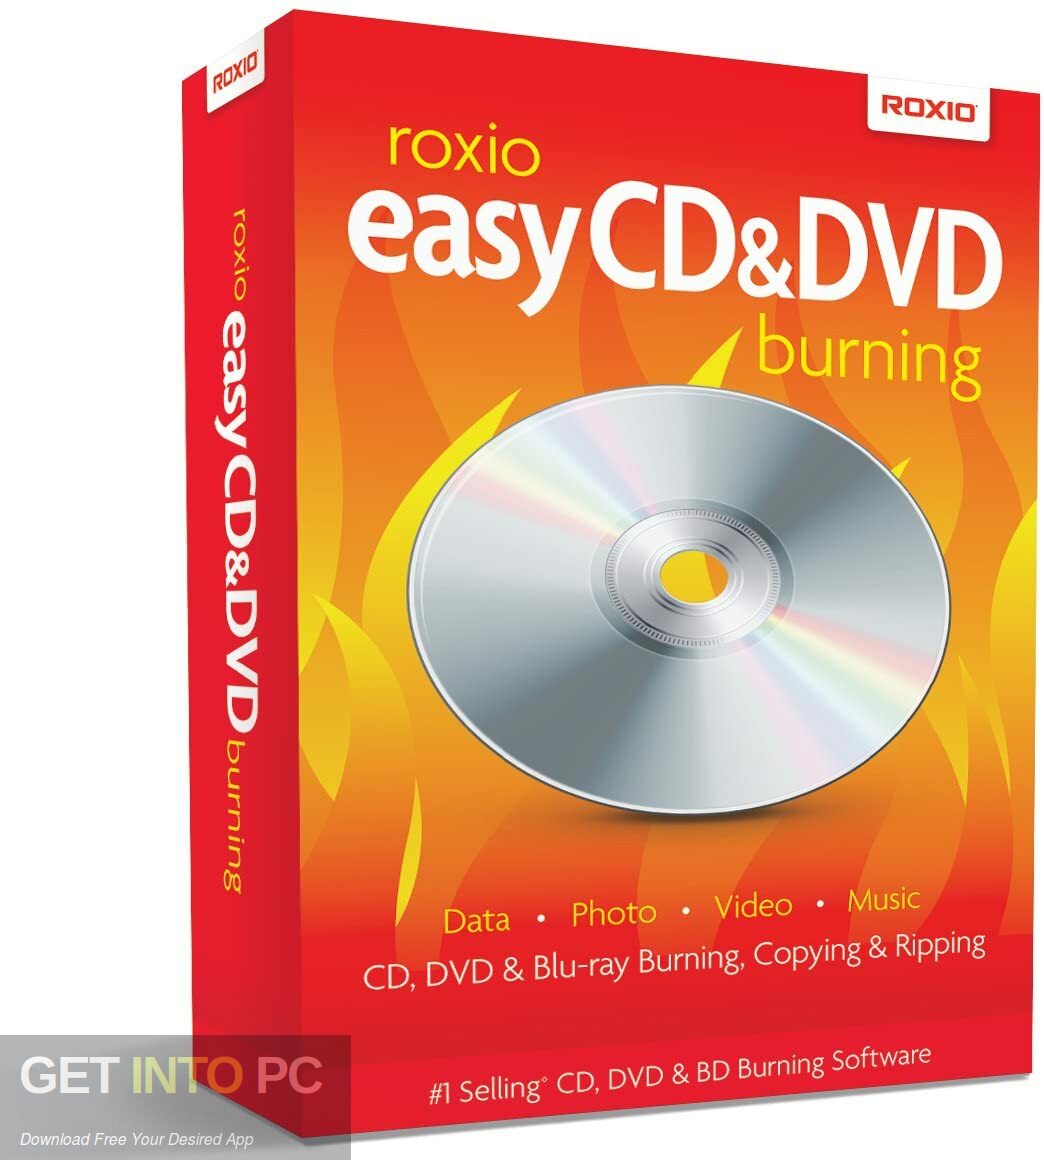 free roxio dvd player